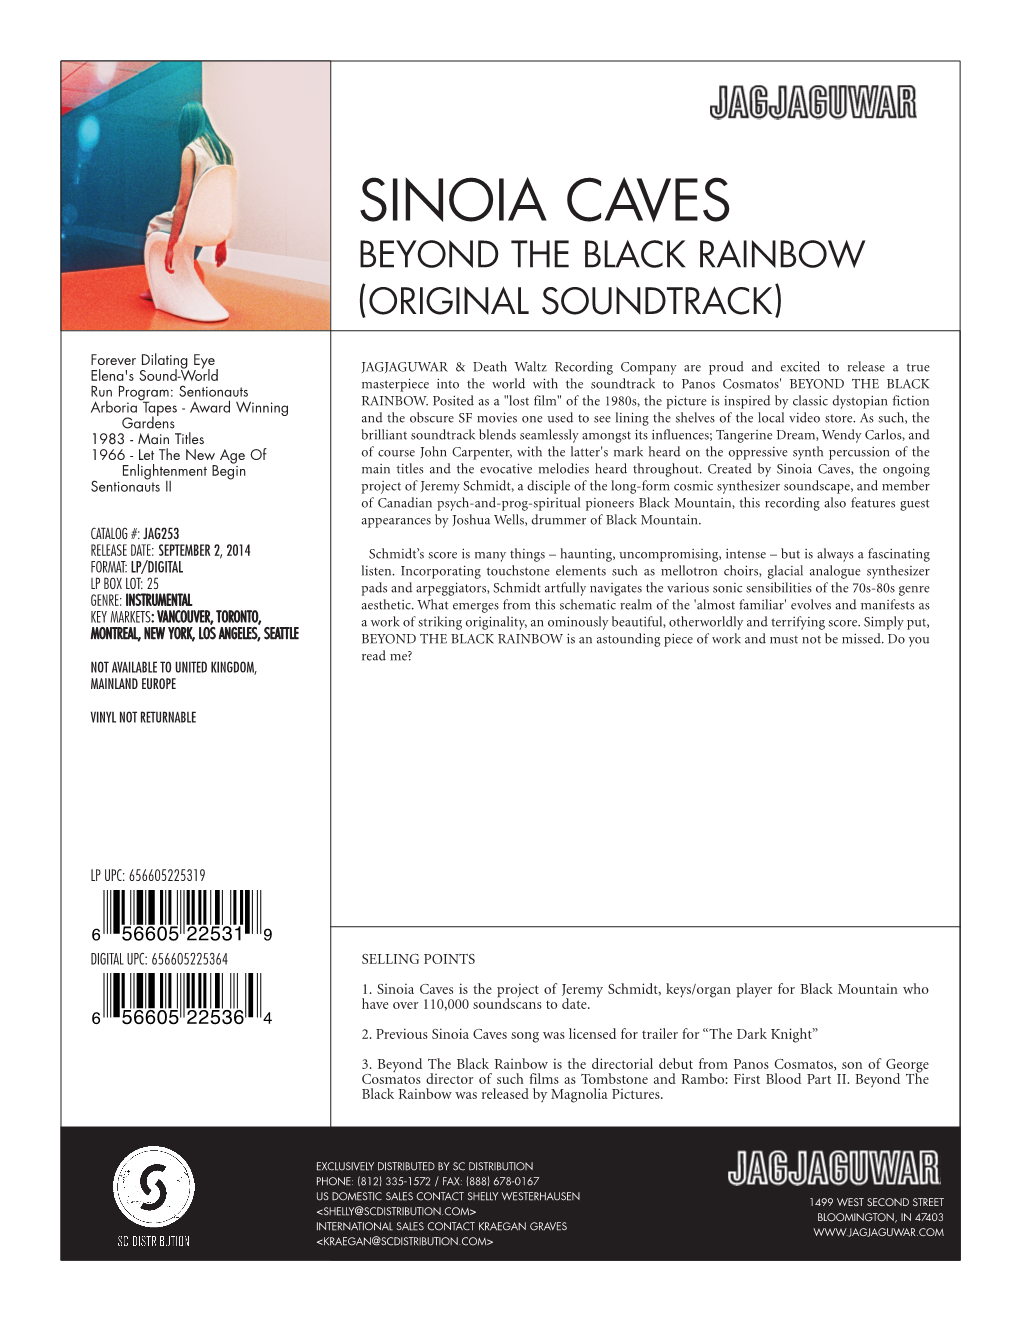 Sinoia Caves Beyond the Black Rainbow (Original Soundtrack)